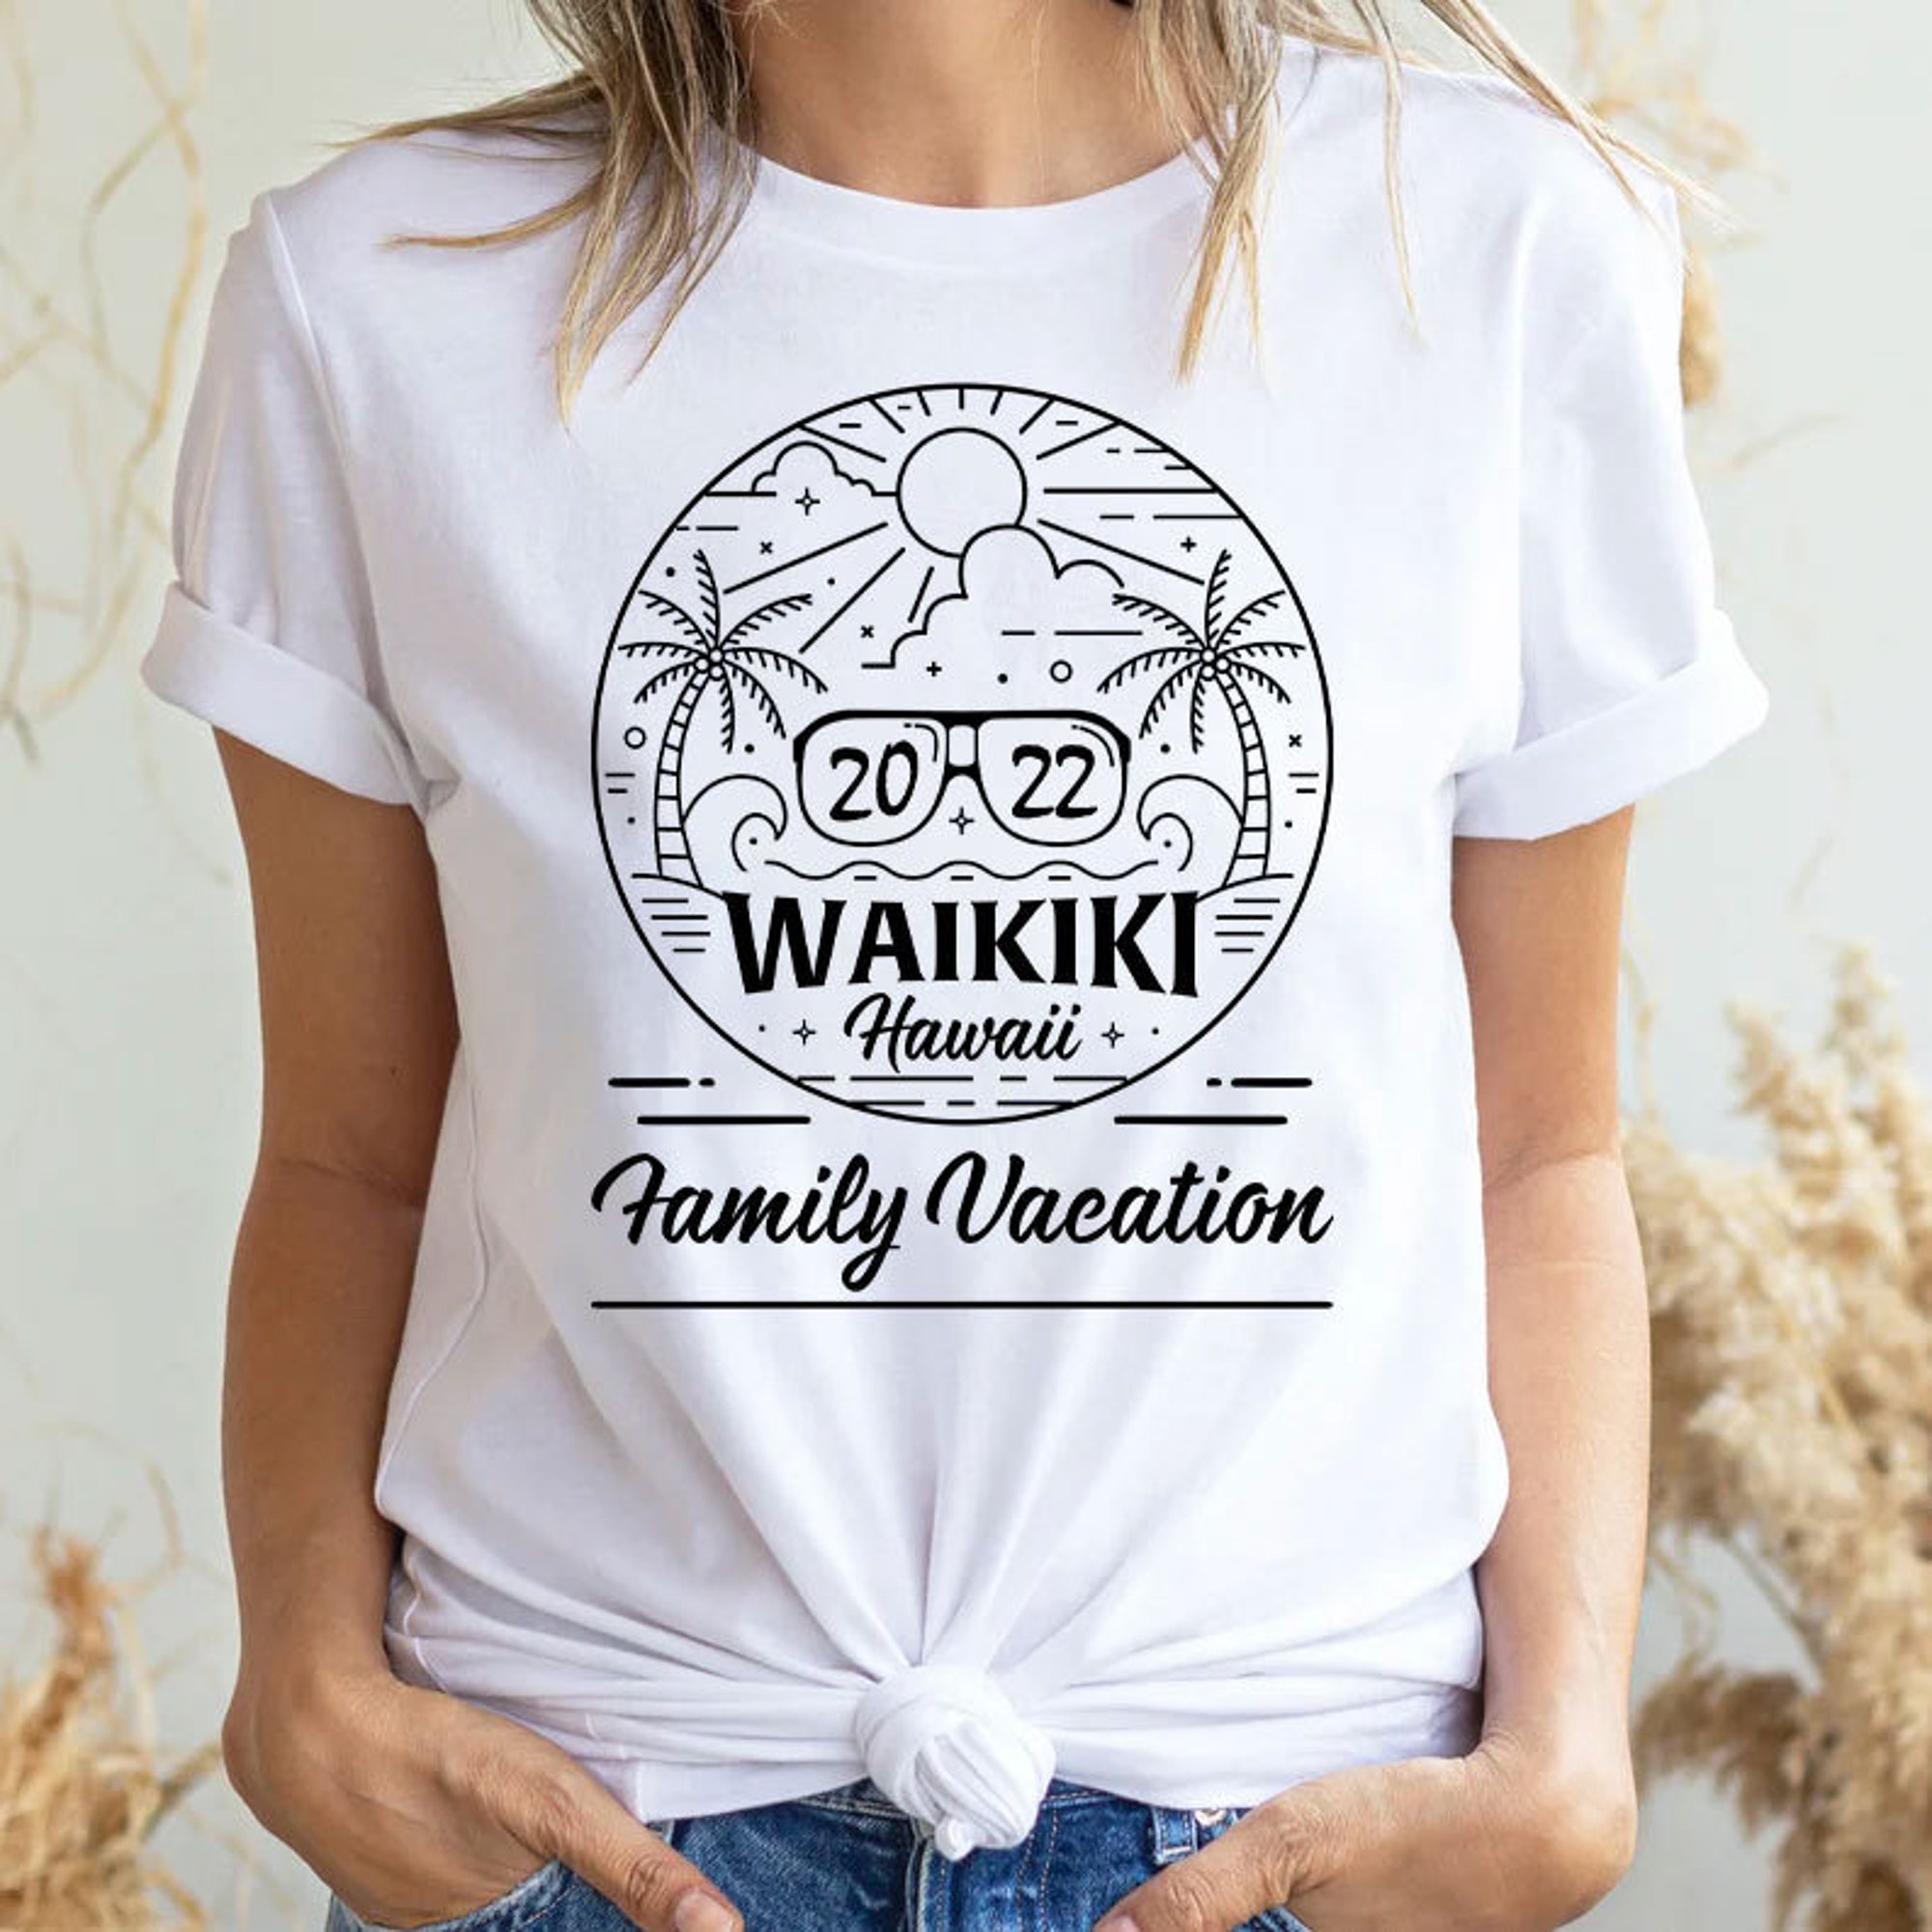 Discover Custom Family Vacation Shirts, Family Beach Shirt, Matching T-shirt,  Summer Camp Shirt, Family Trip 2022 Shirt, Group Vacation Shirt